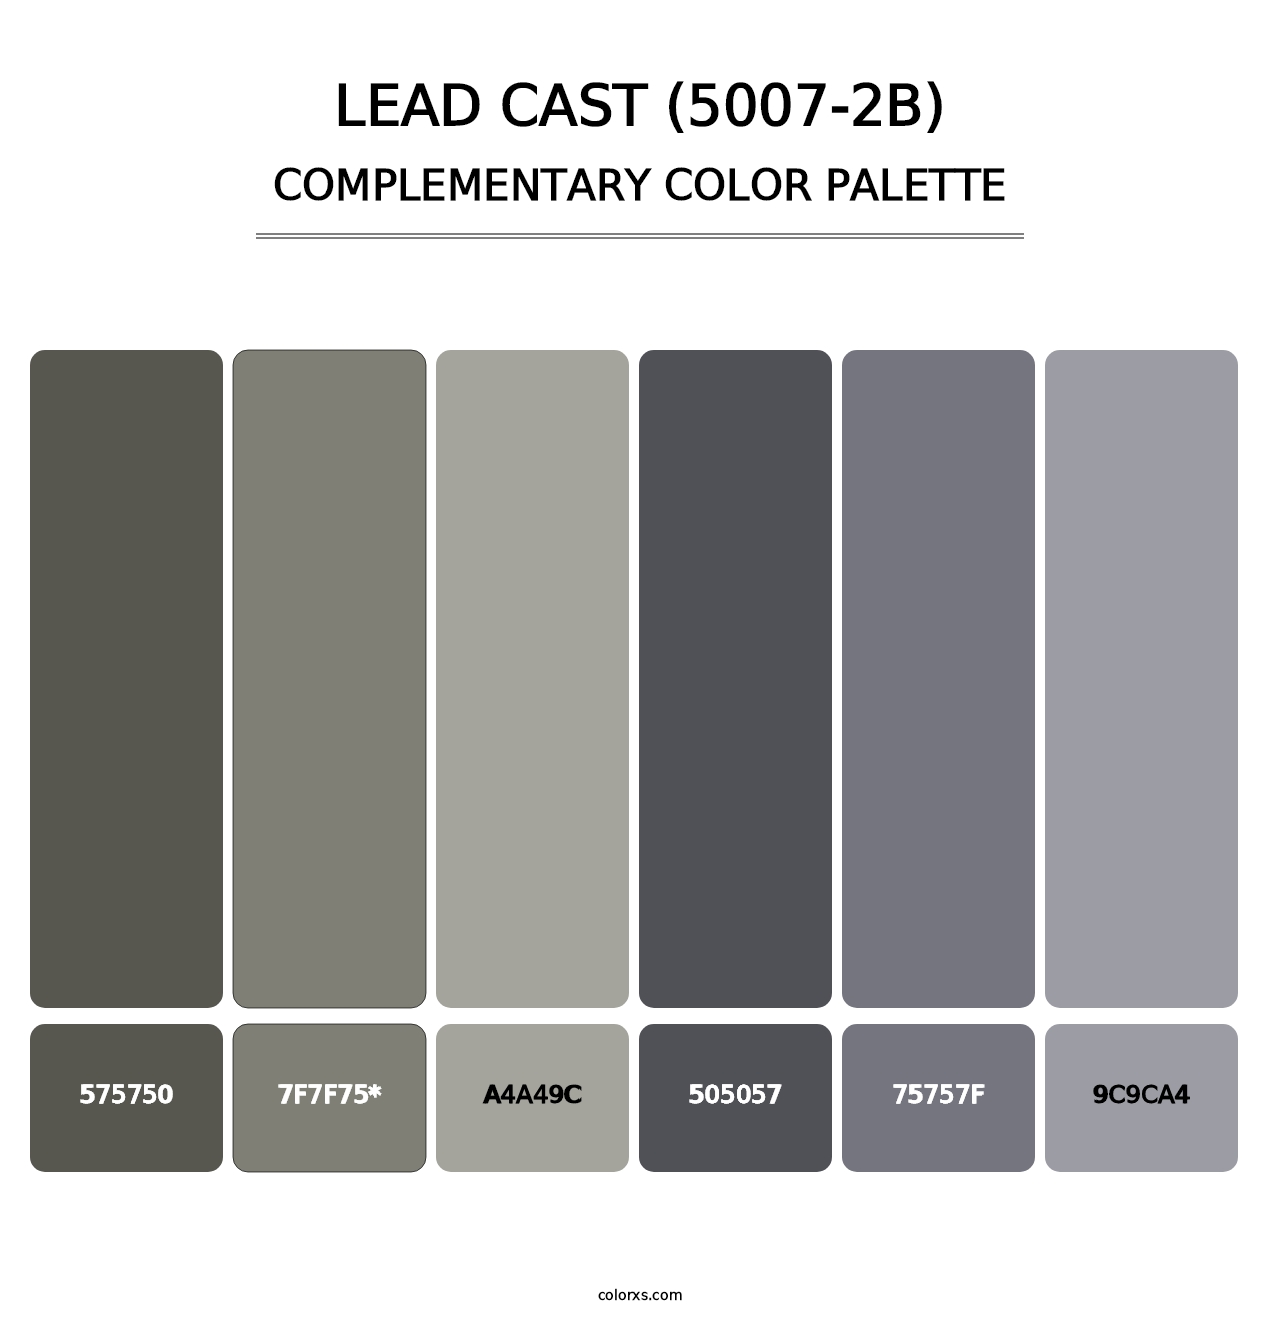 Lead Cast (5007-2B) - Complementary Color Palette